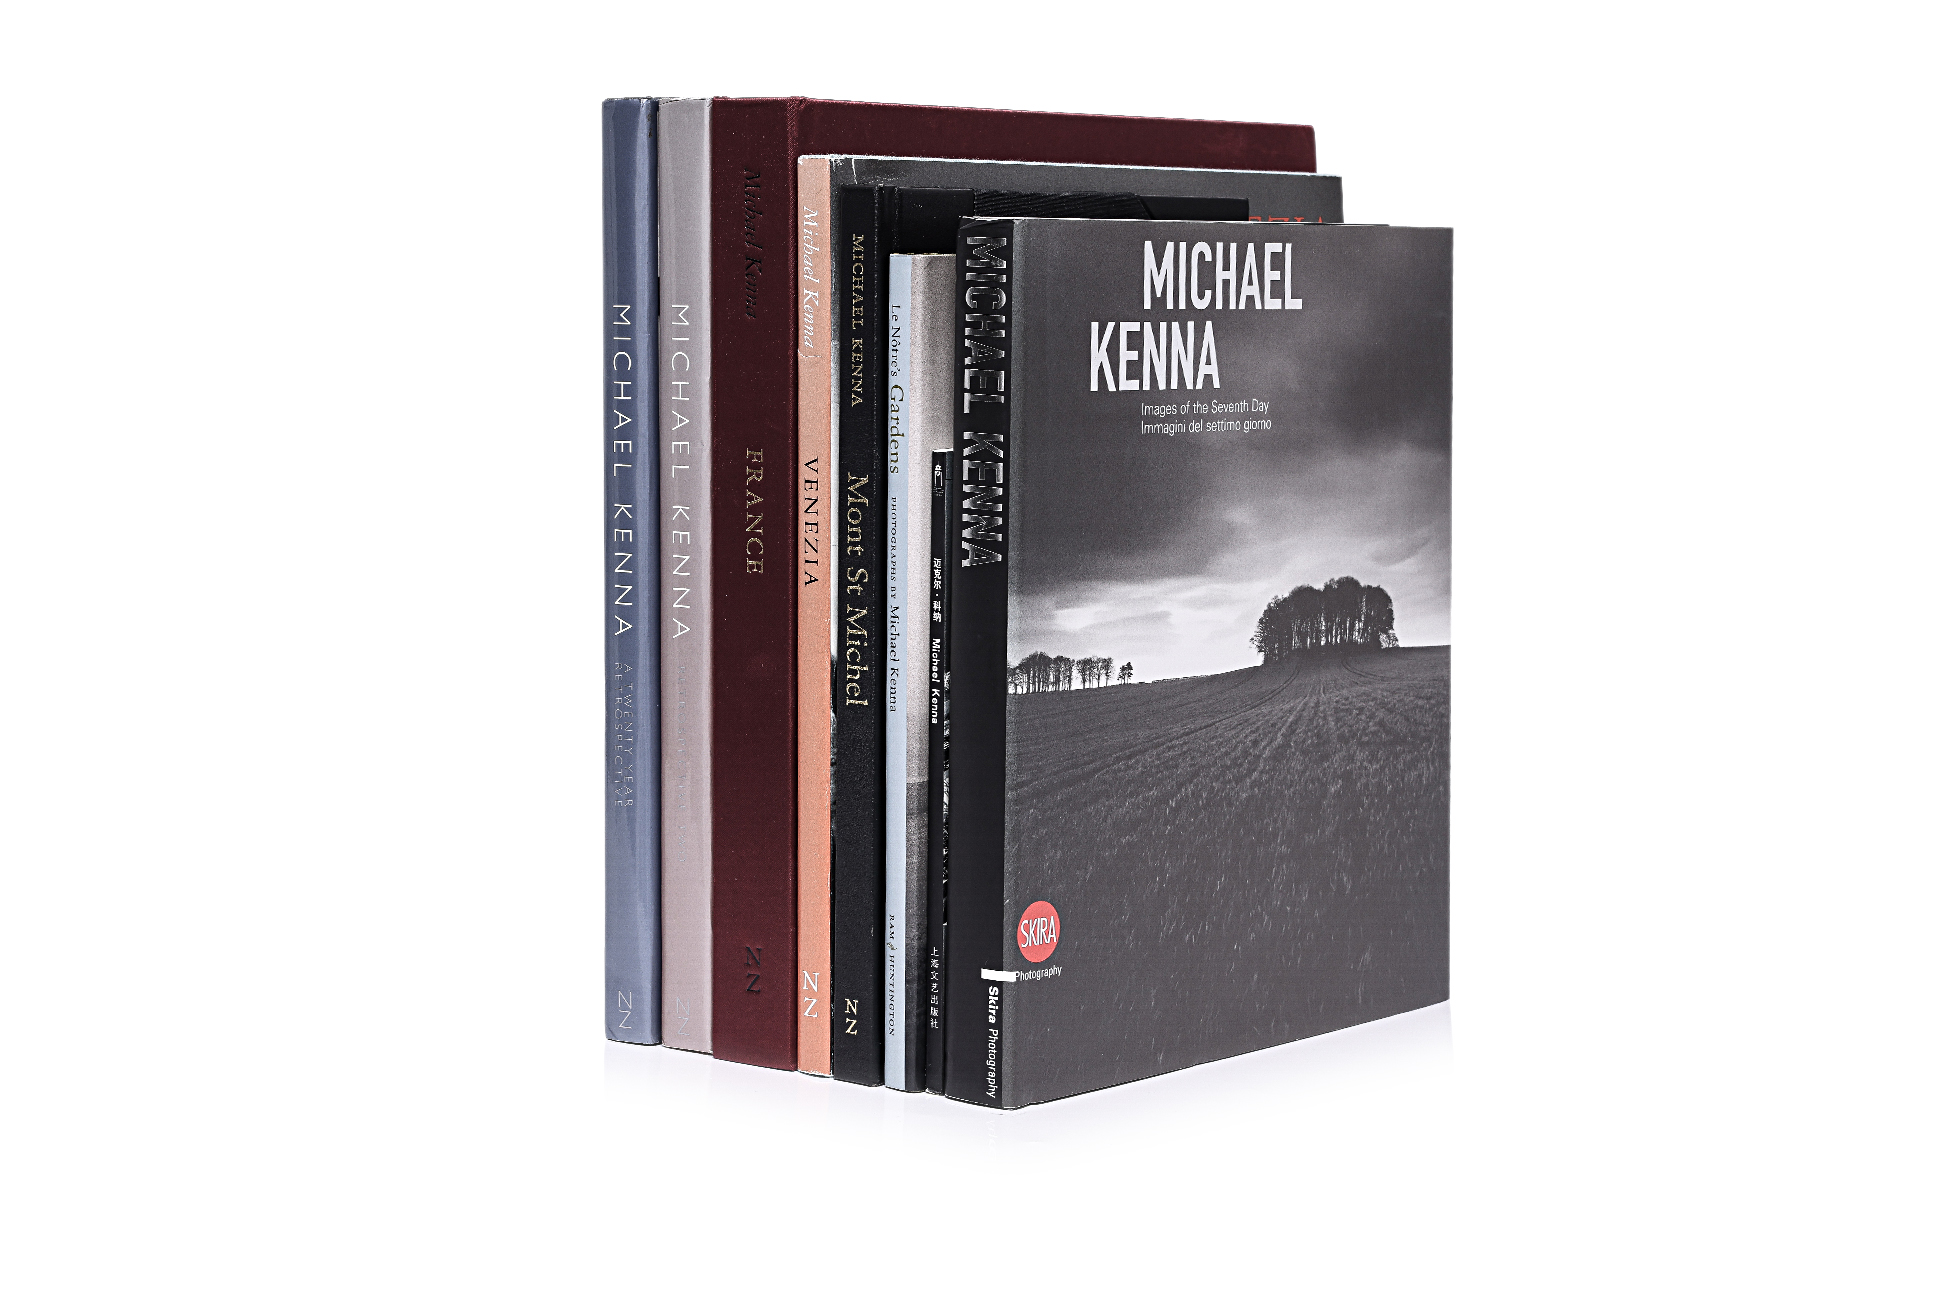 PHOTOGRAPHY BOOKS - MICHAEL KENNA